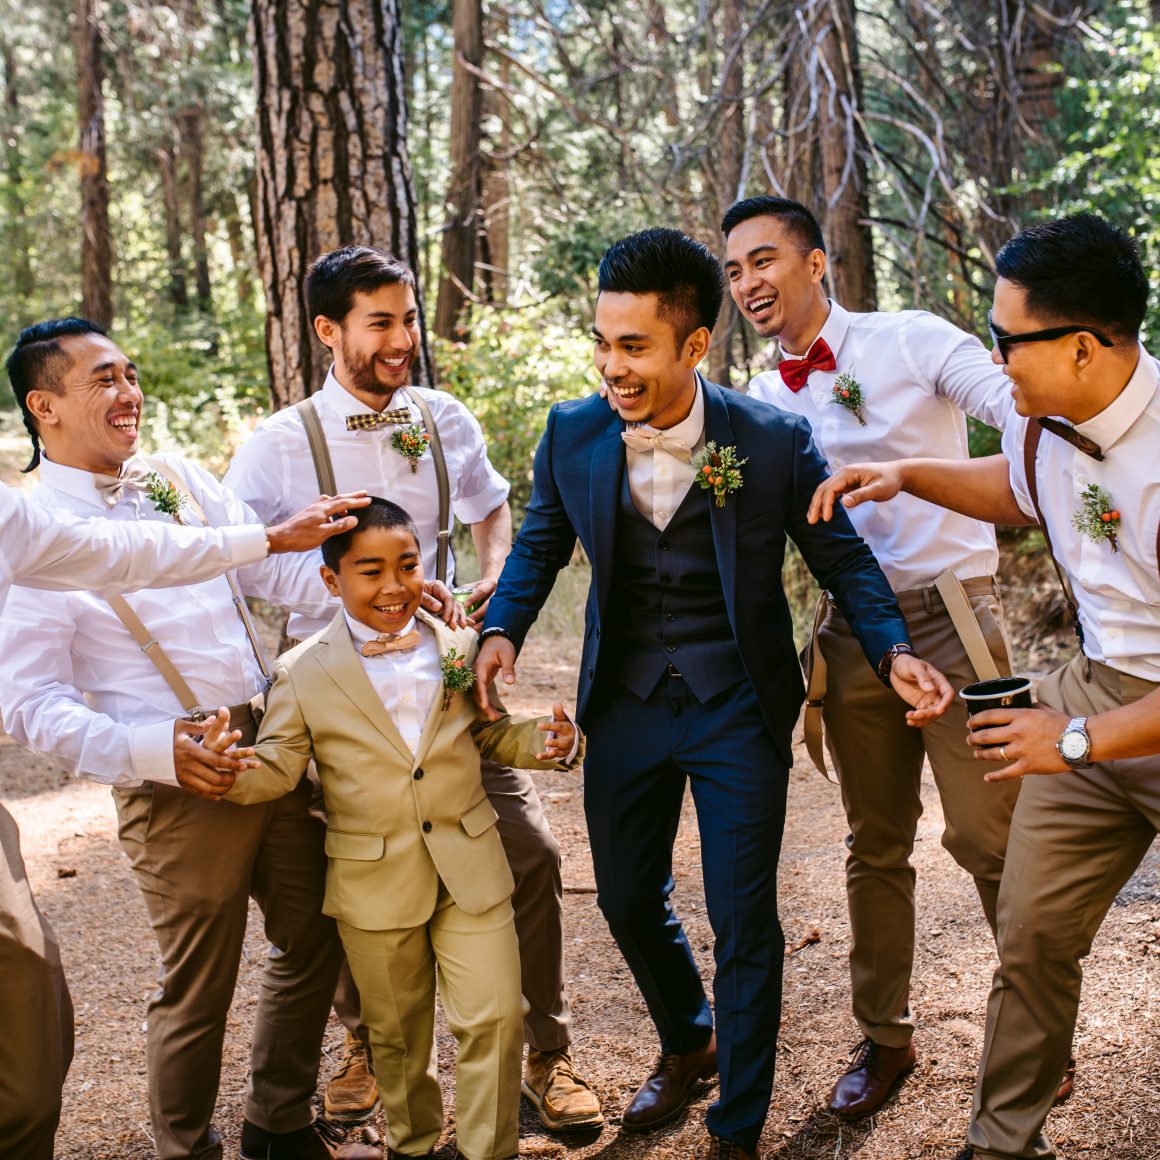 Yosemite Wedding Video